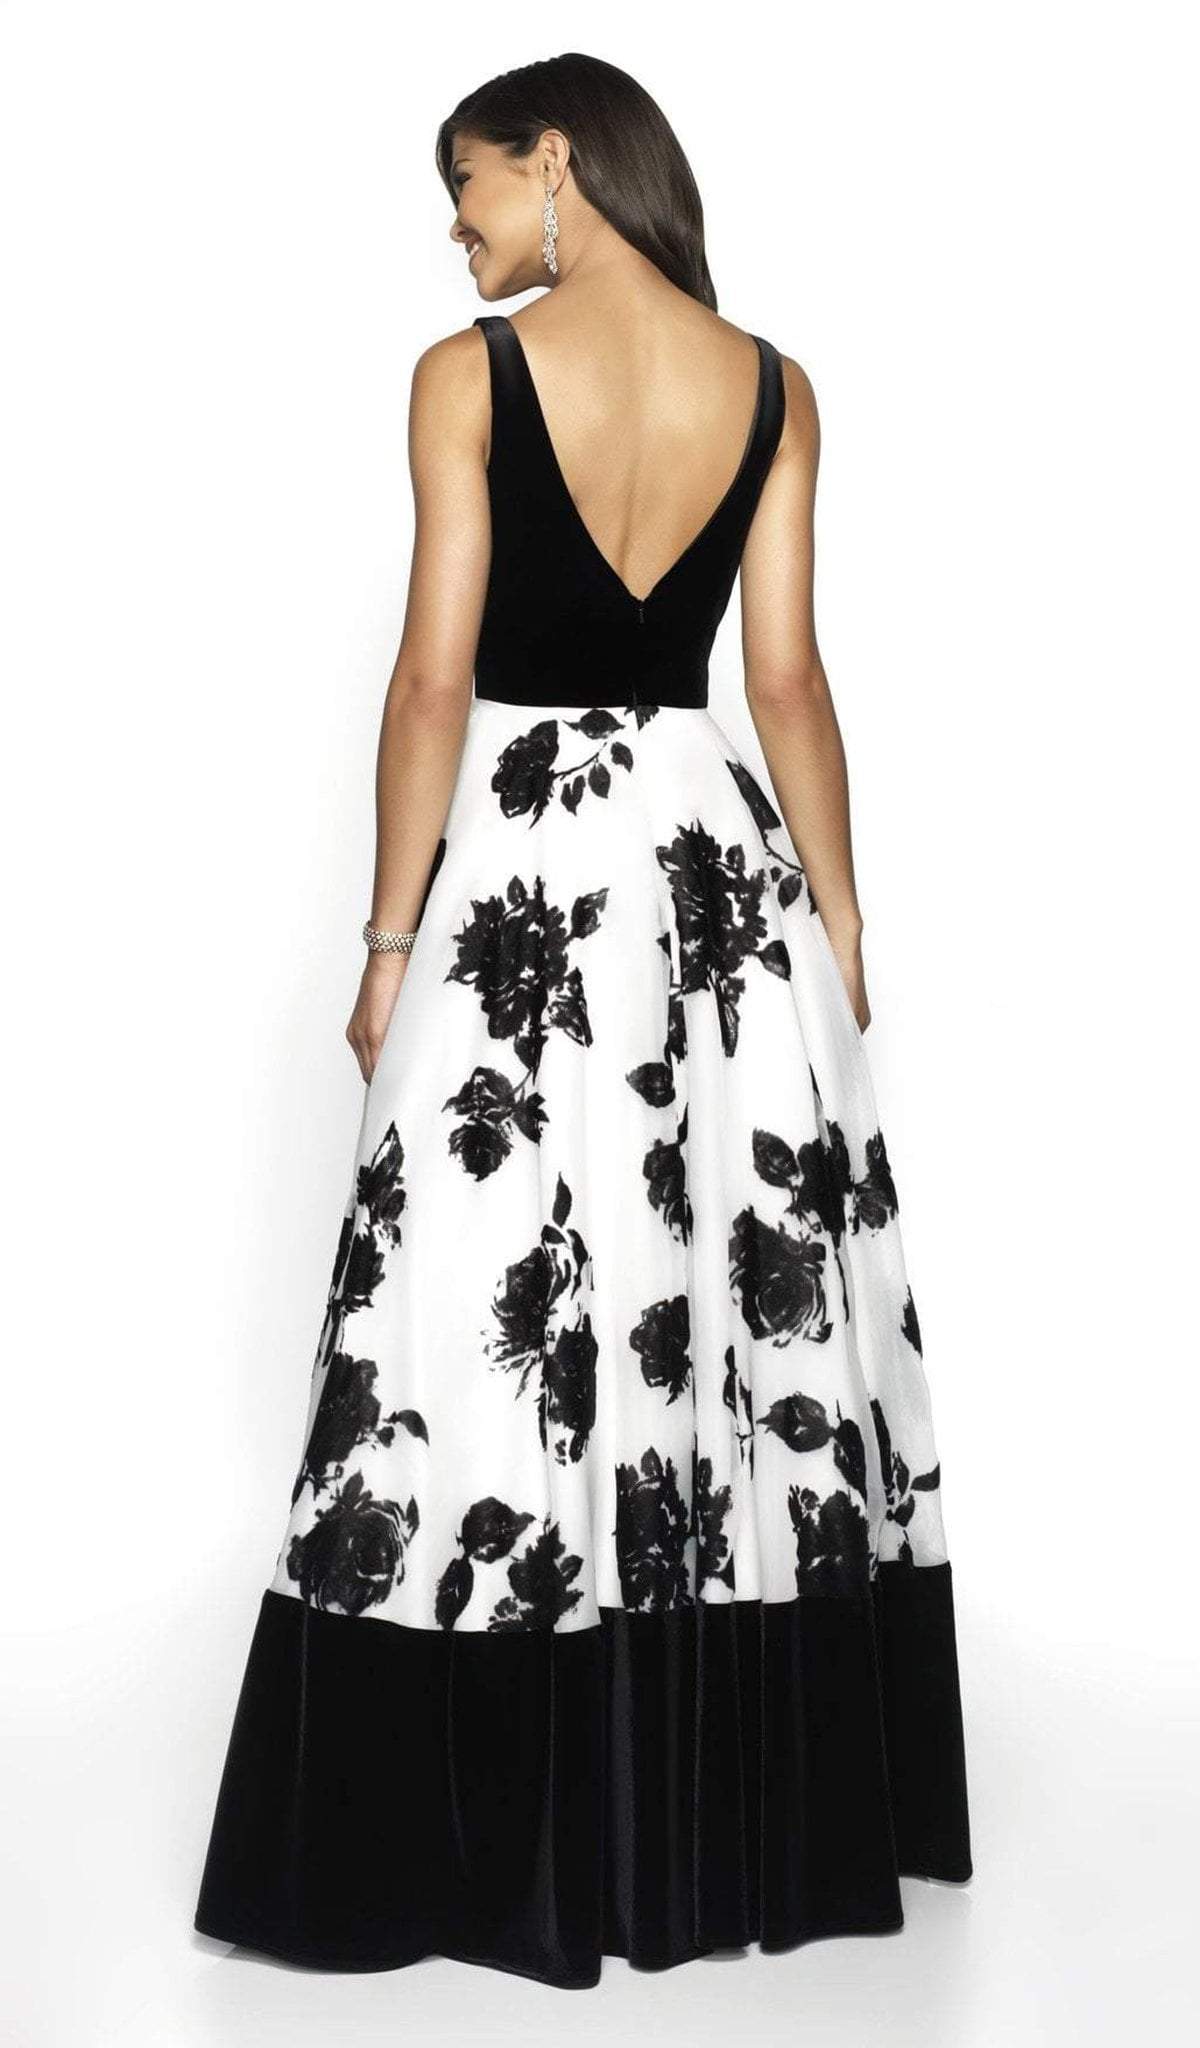 Blush by Alexia Designs - 5725 V-Neck Floral A-Line Dress Special Occasion Dress